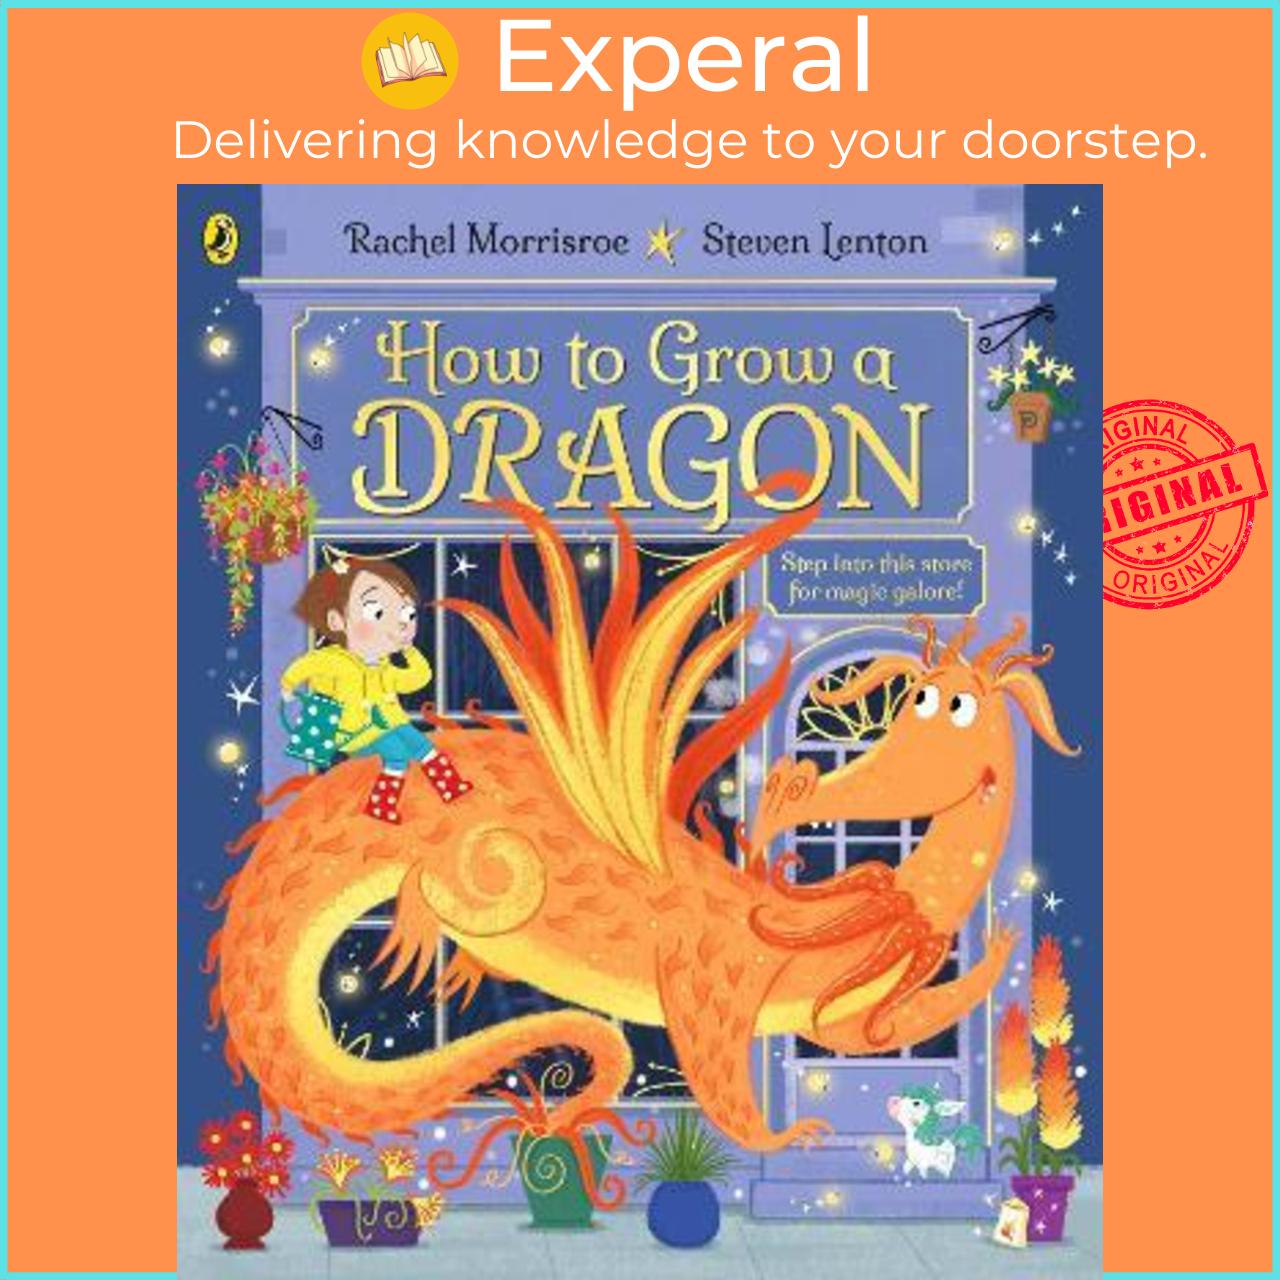 Sách - How to Grow a Dragon by Rachel Morrisroe (UK edition, paperback)